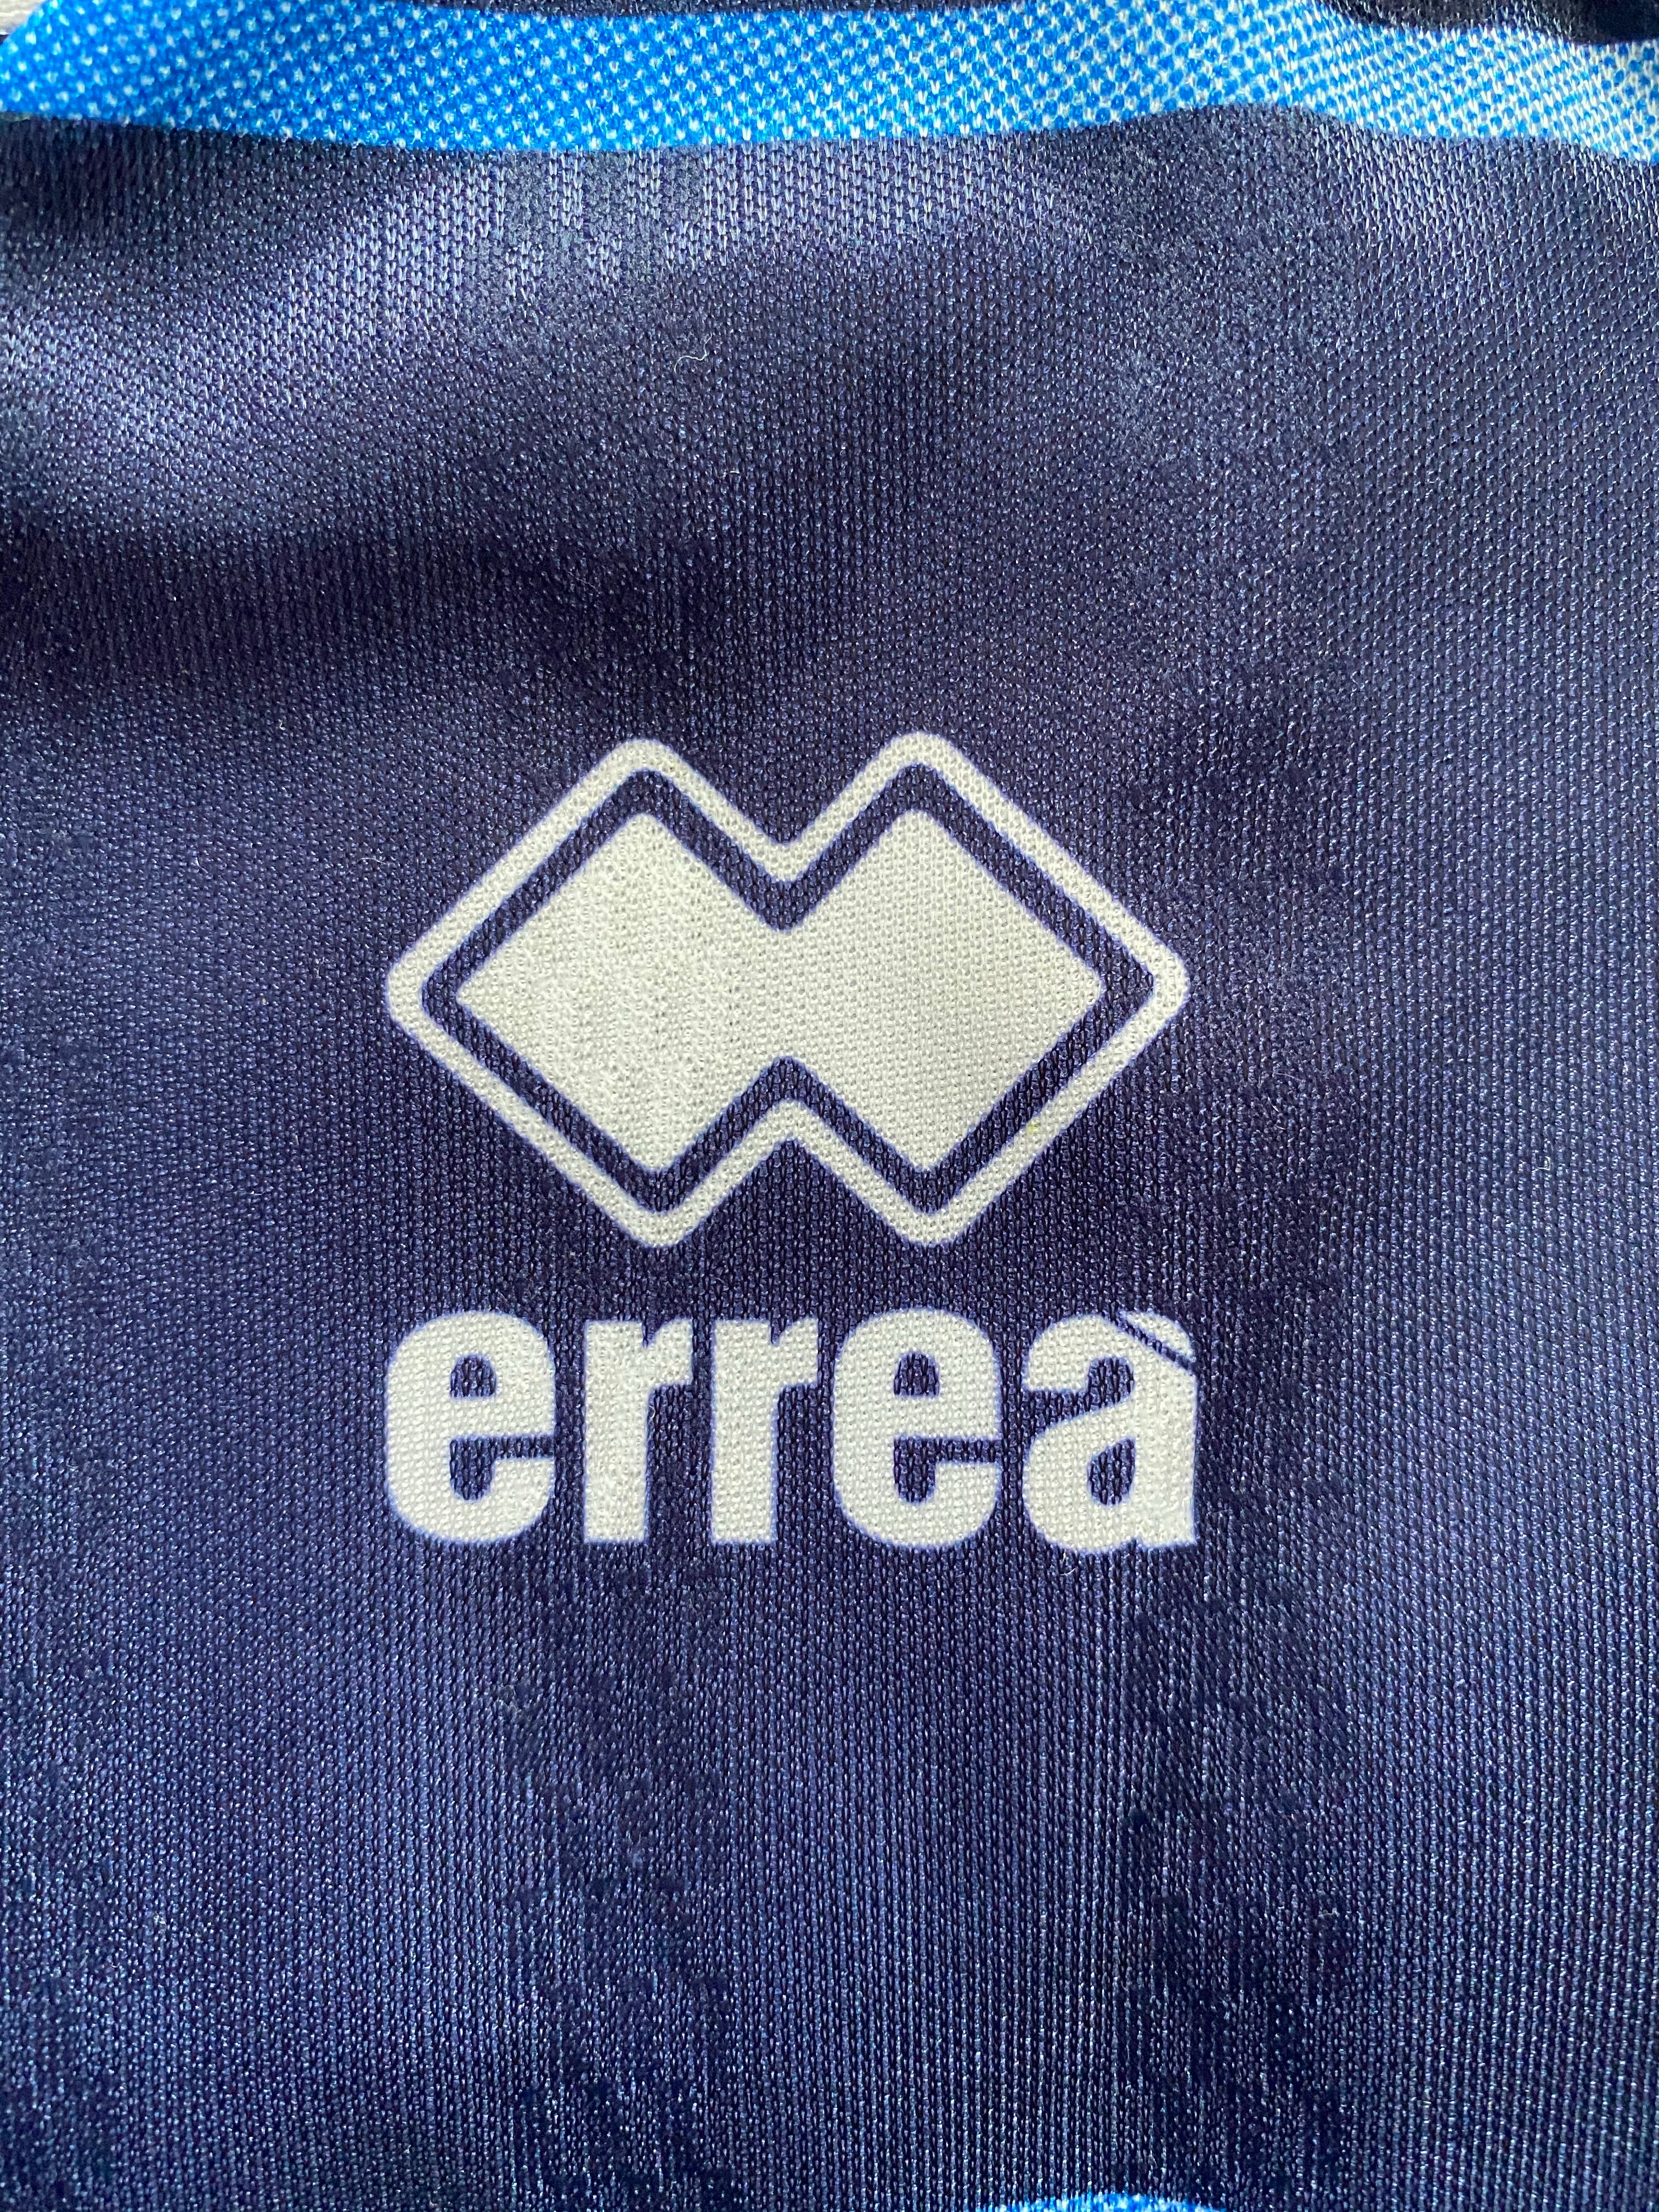 2000/01 Empoli Home Shirt (L) 9/10